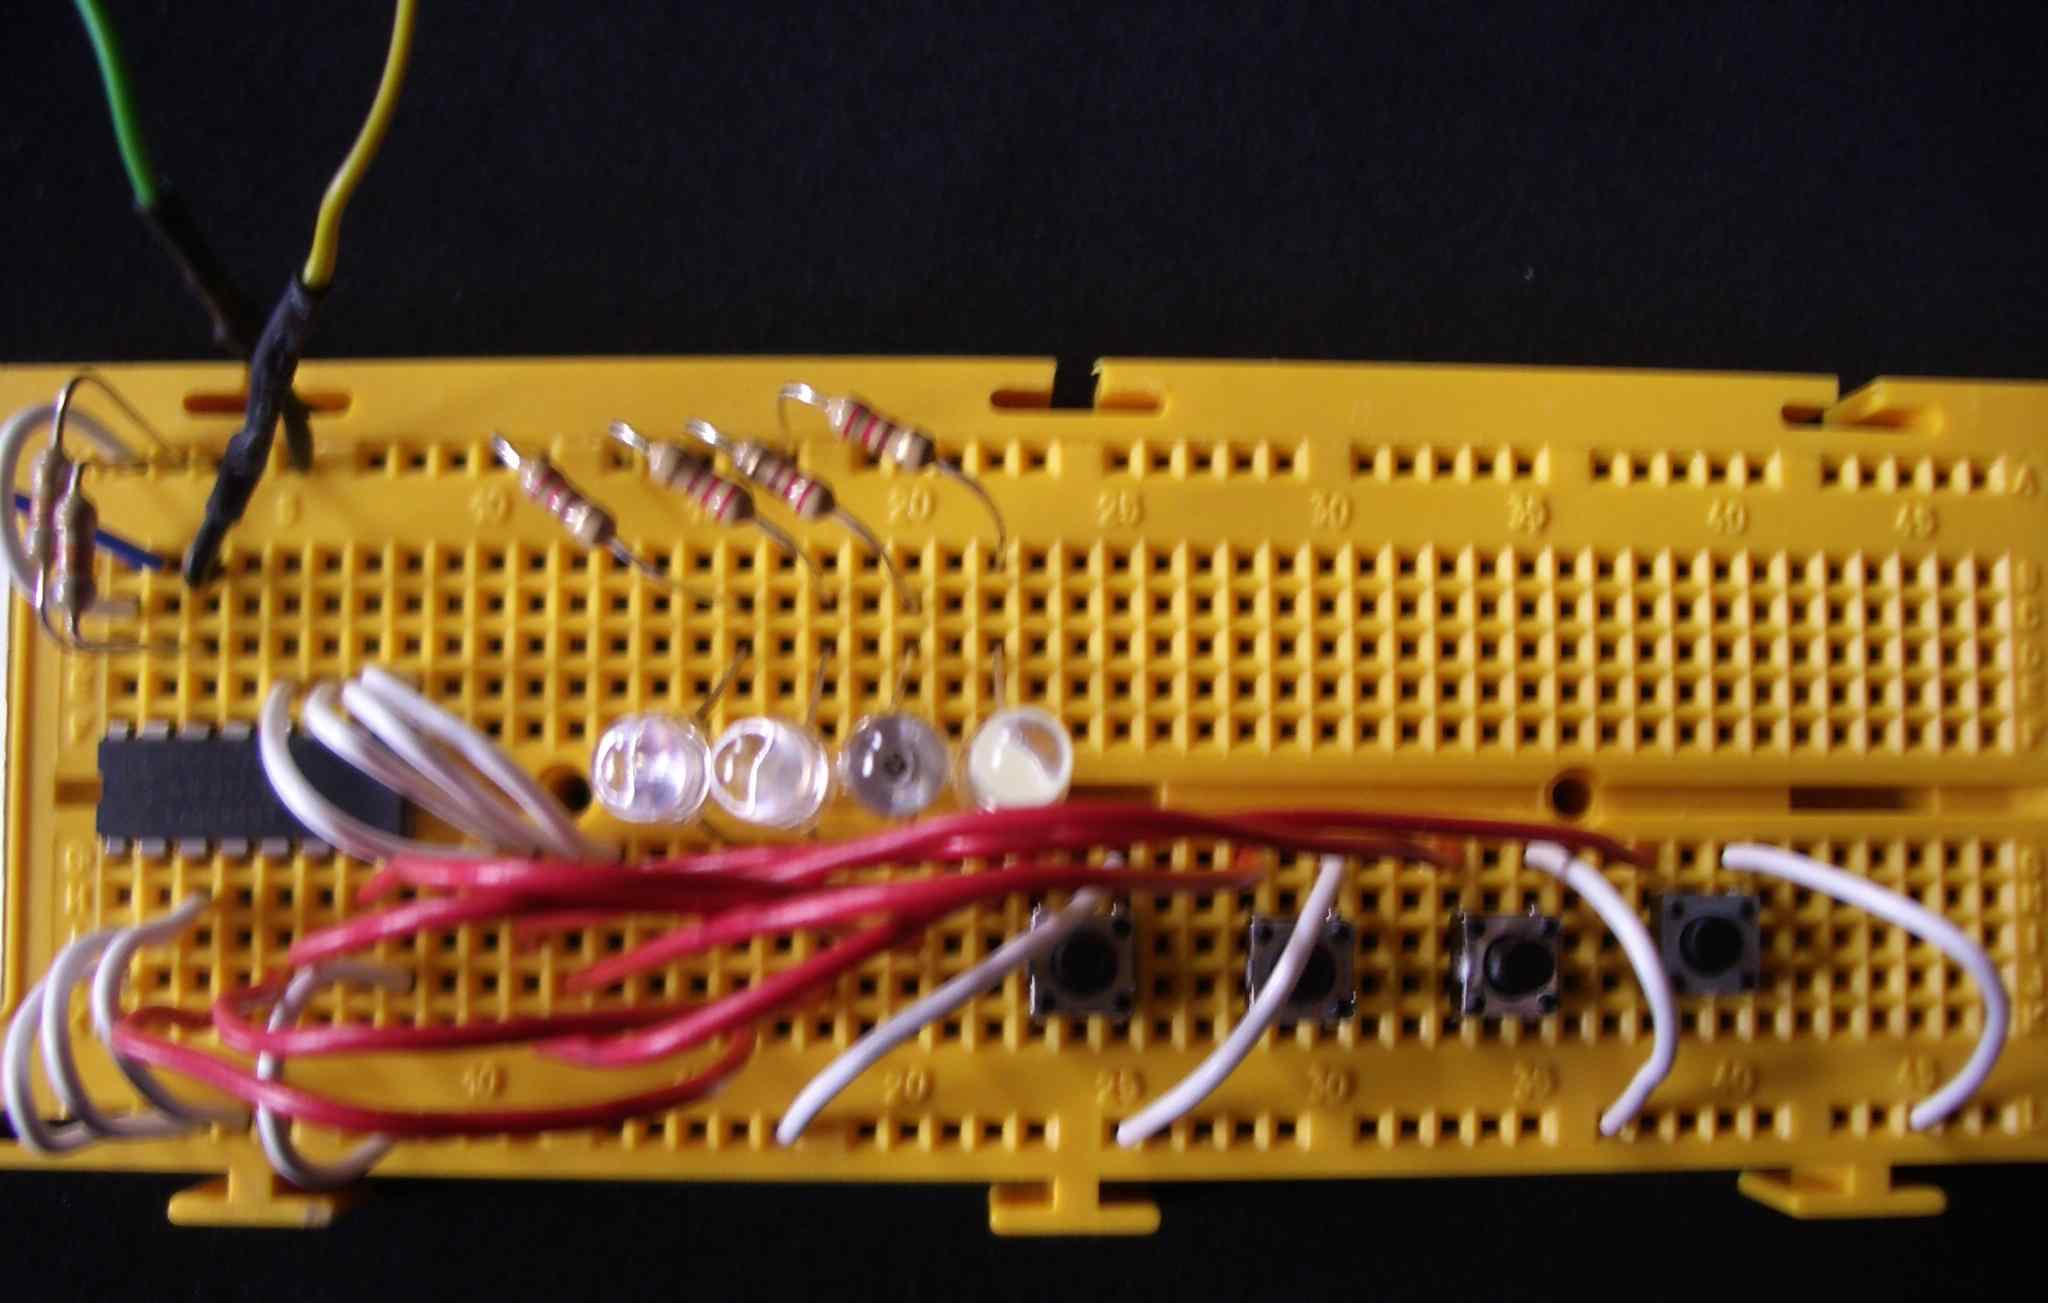 Circuito digital conectar interruptores y leds LEGO Mindstorm NXT